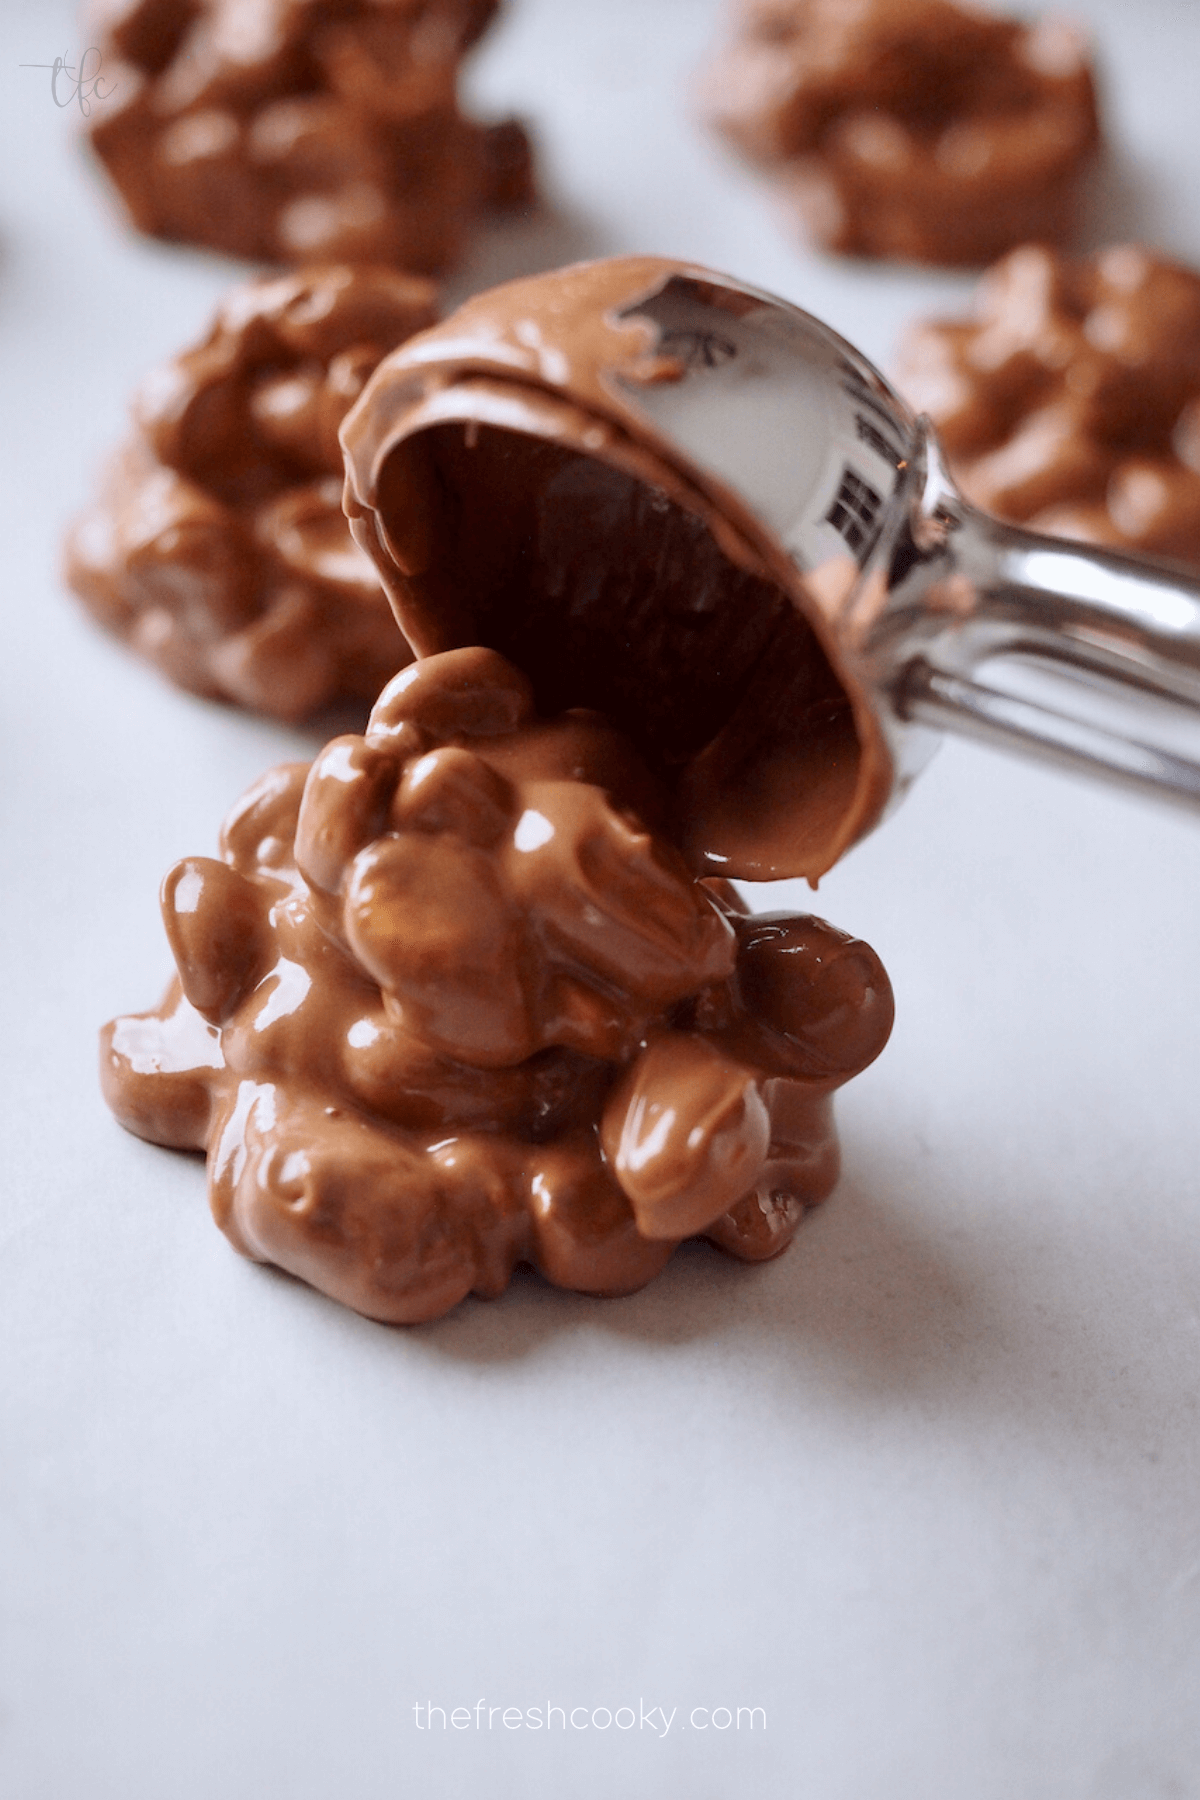 Crock Pot Peanut Clusters - Plowing Through Life